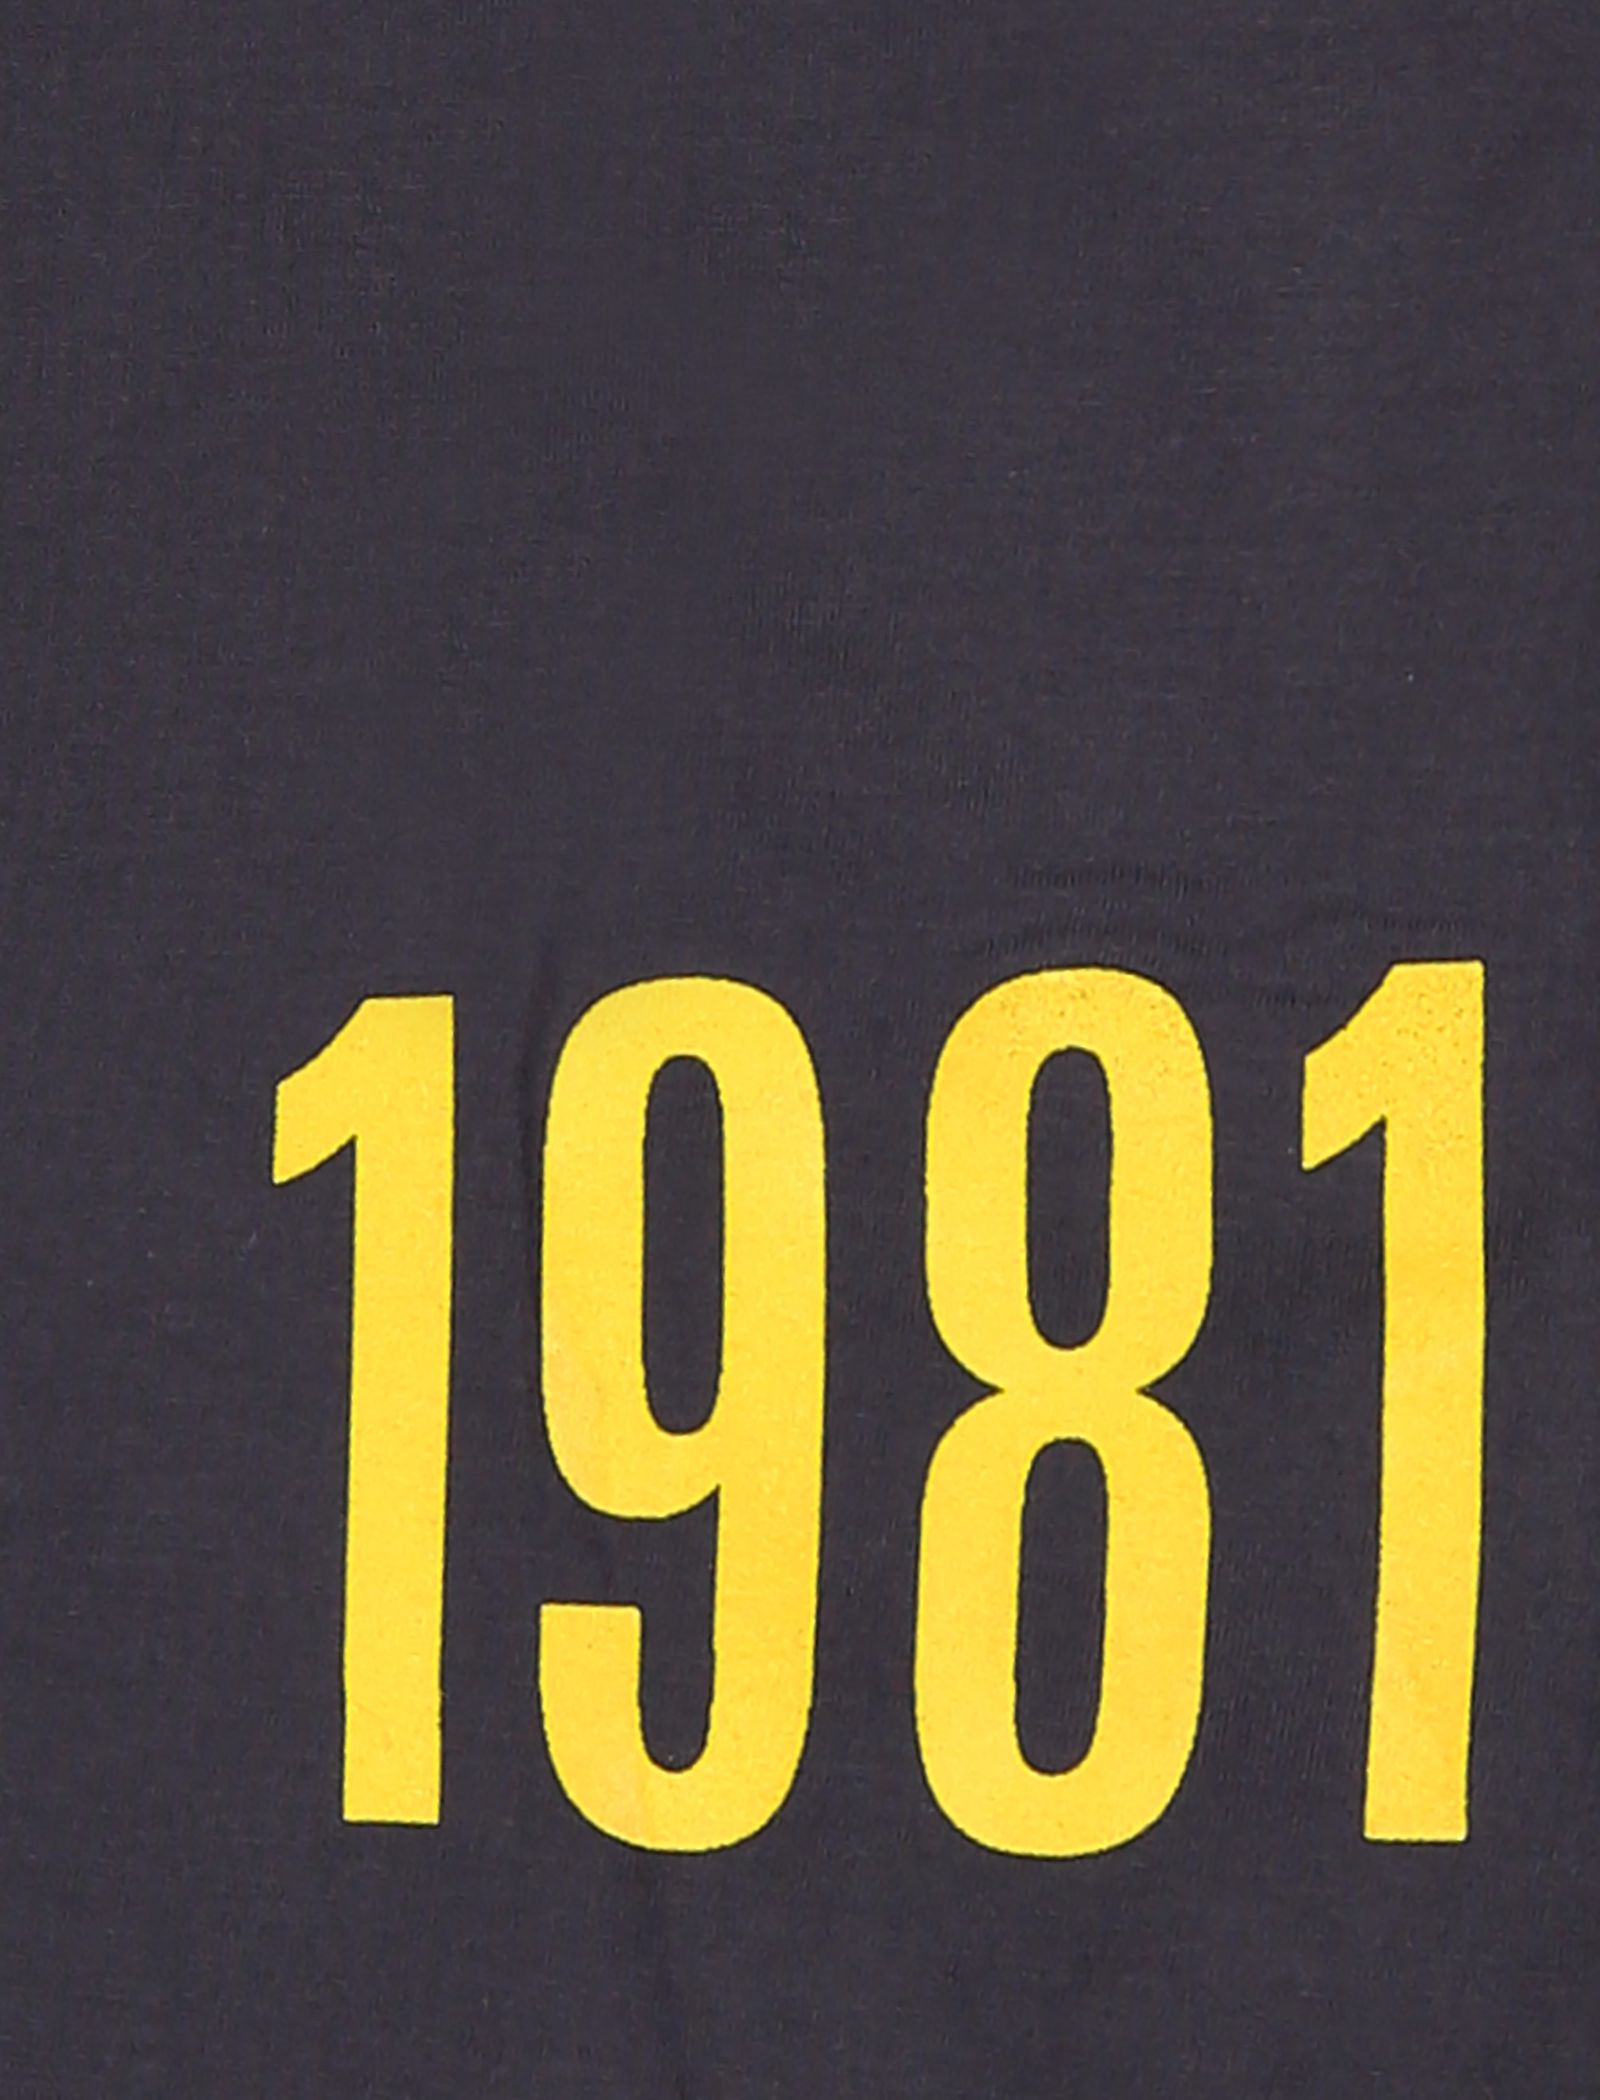 تی شرت و شلوارک نخی پسرانه 1981 - خرس کوچولو - زرد / سرمه اي - 8